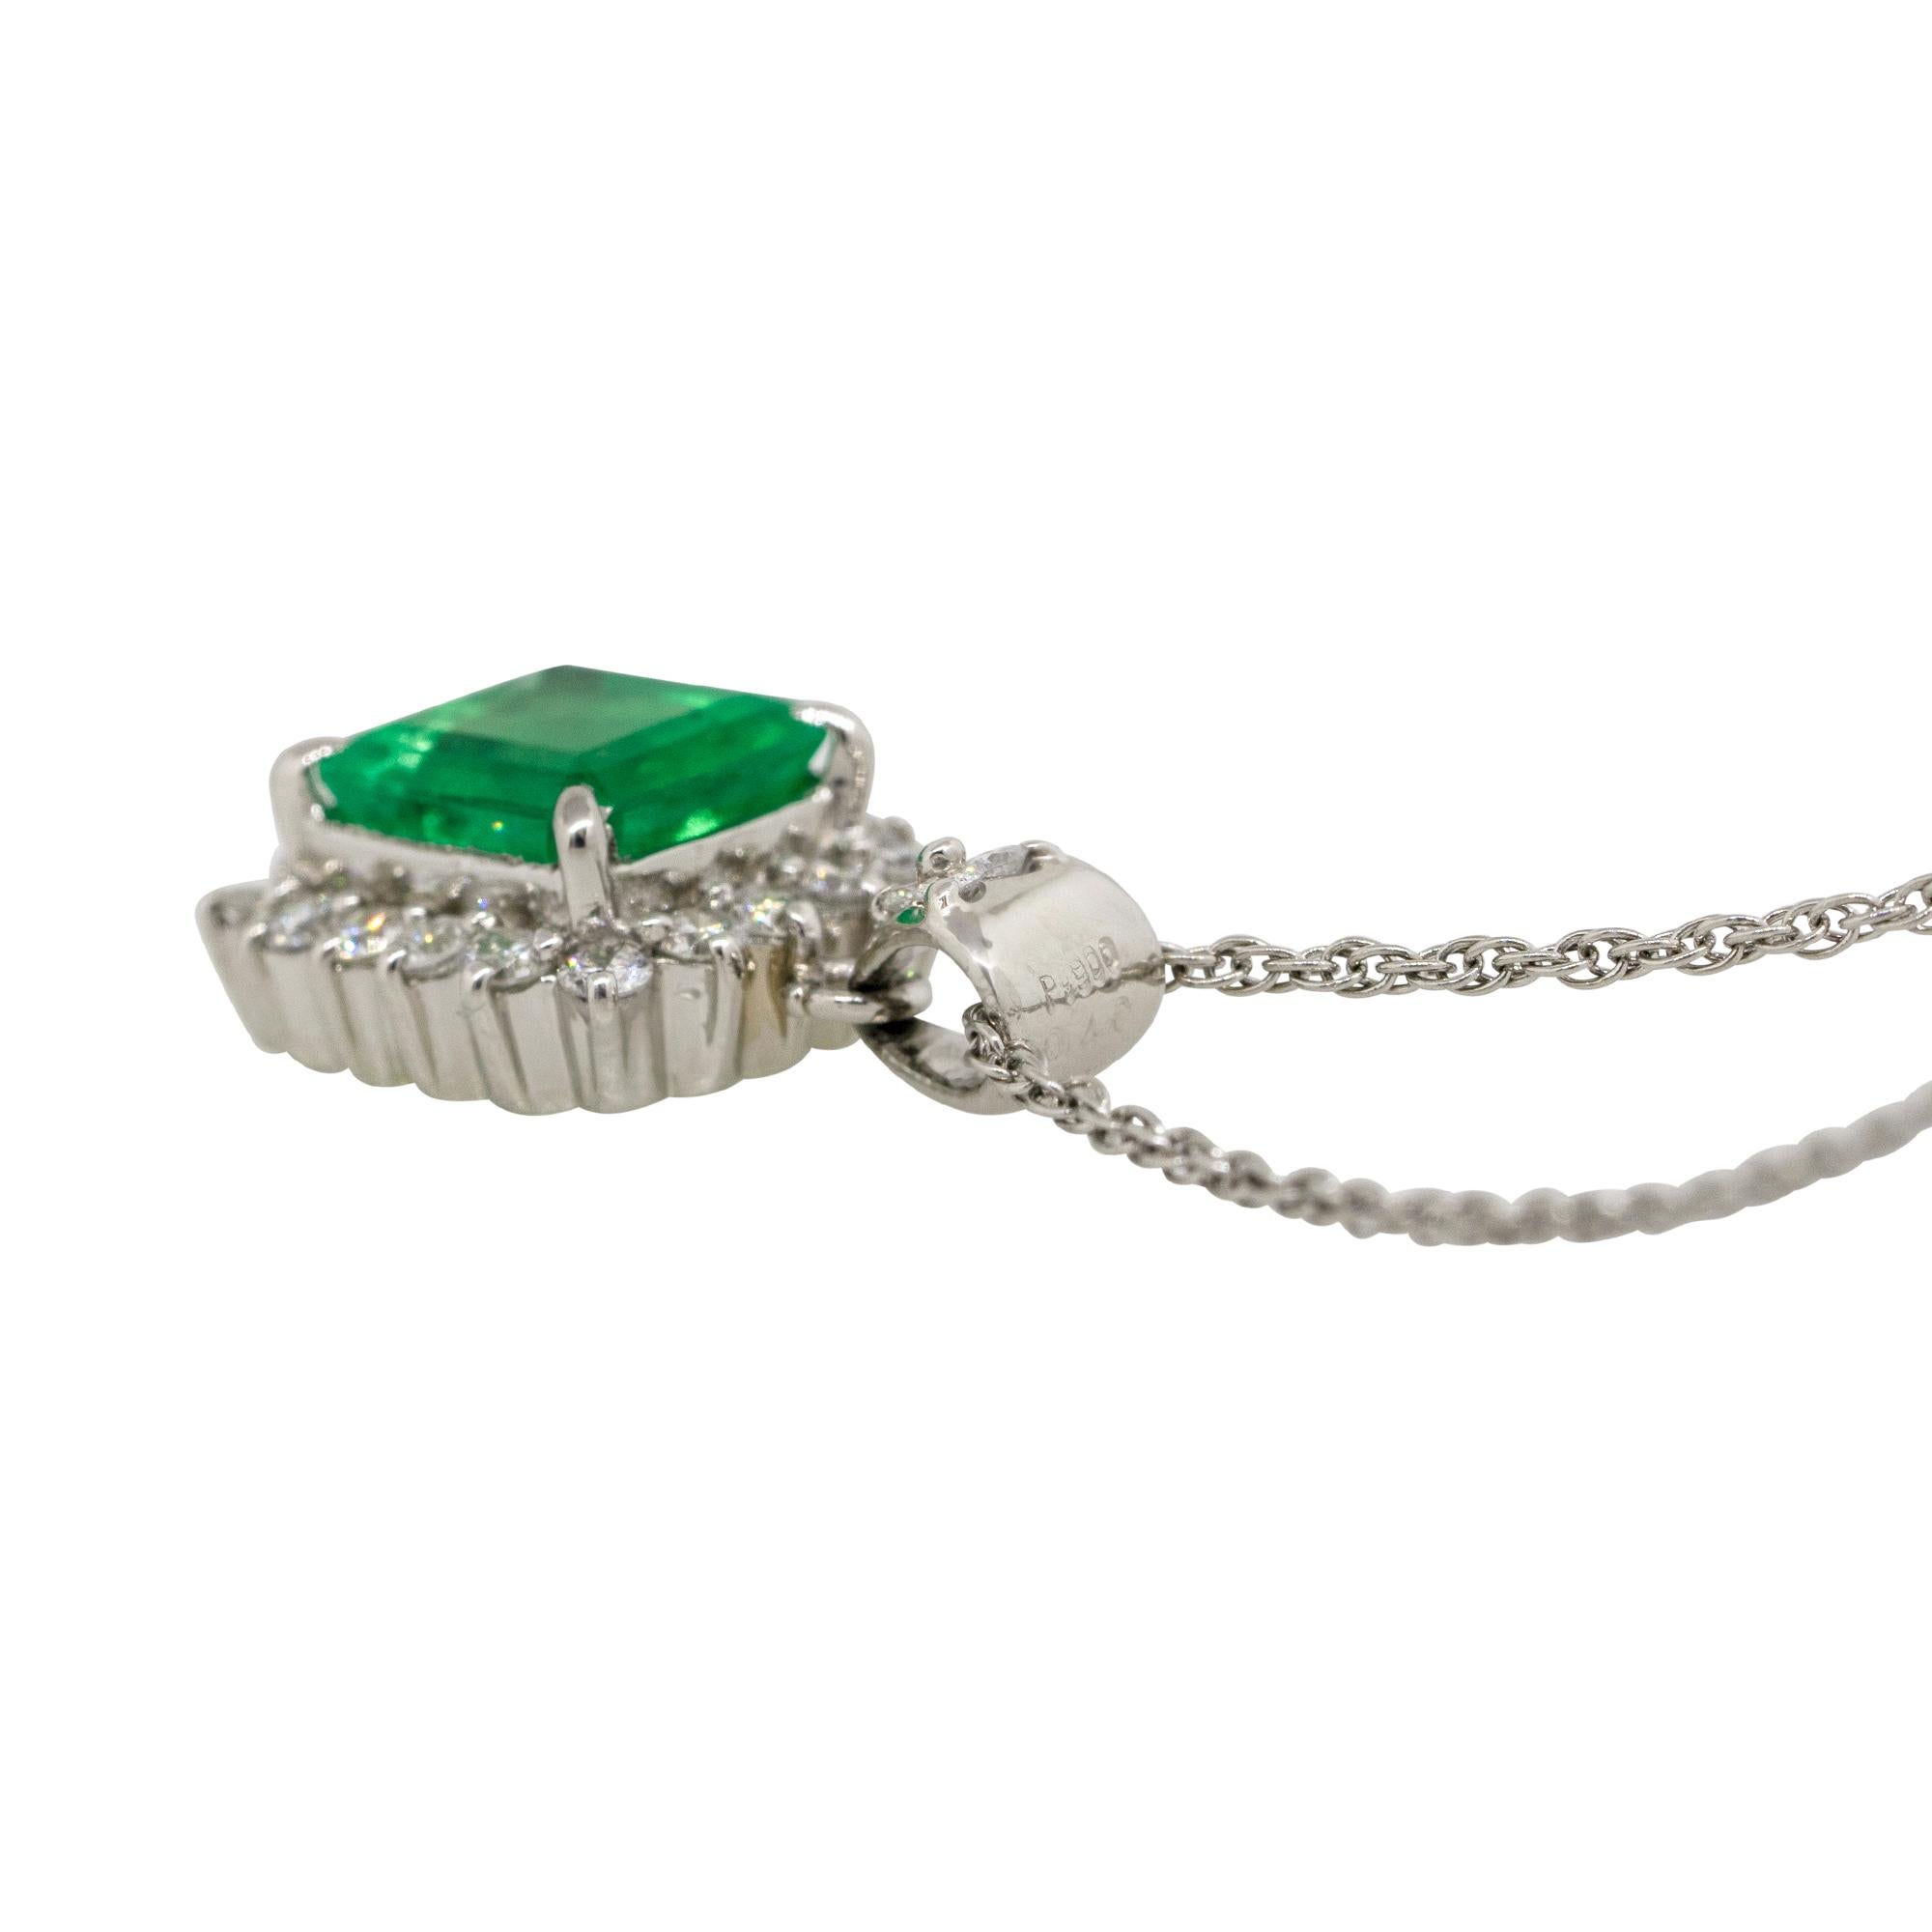 2.07 Carat Emerald with Diamond Halo Pendant Necklace Platinum in Stock 1